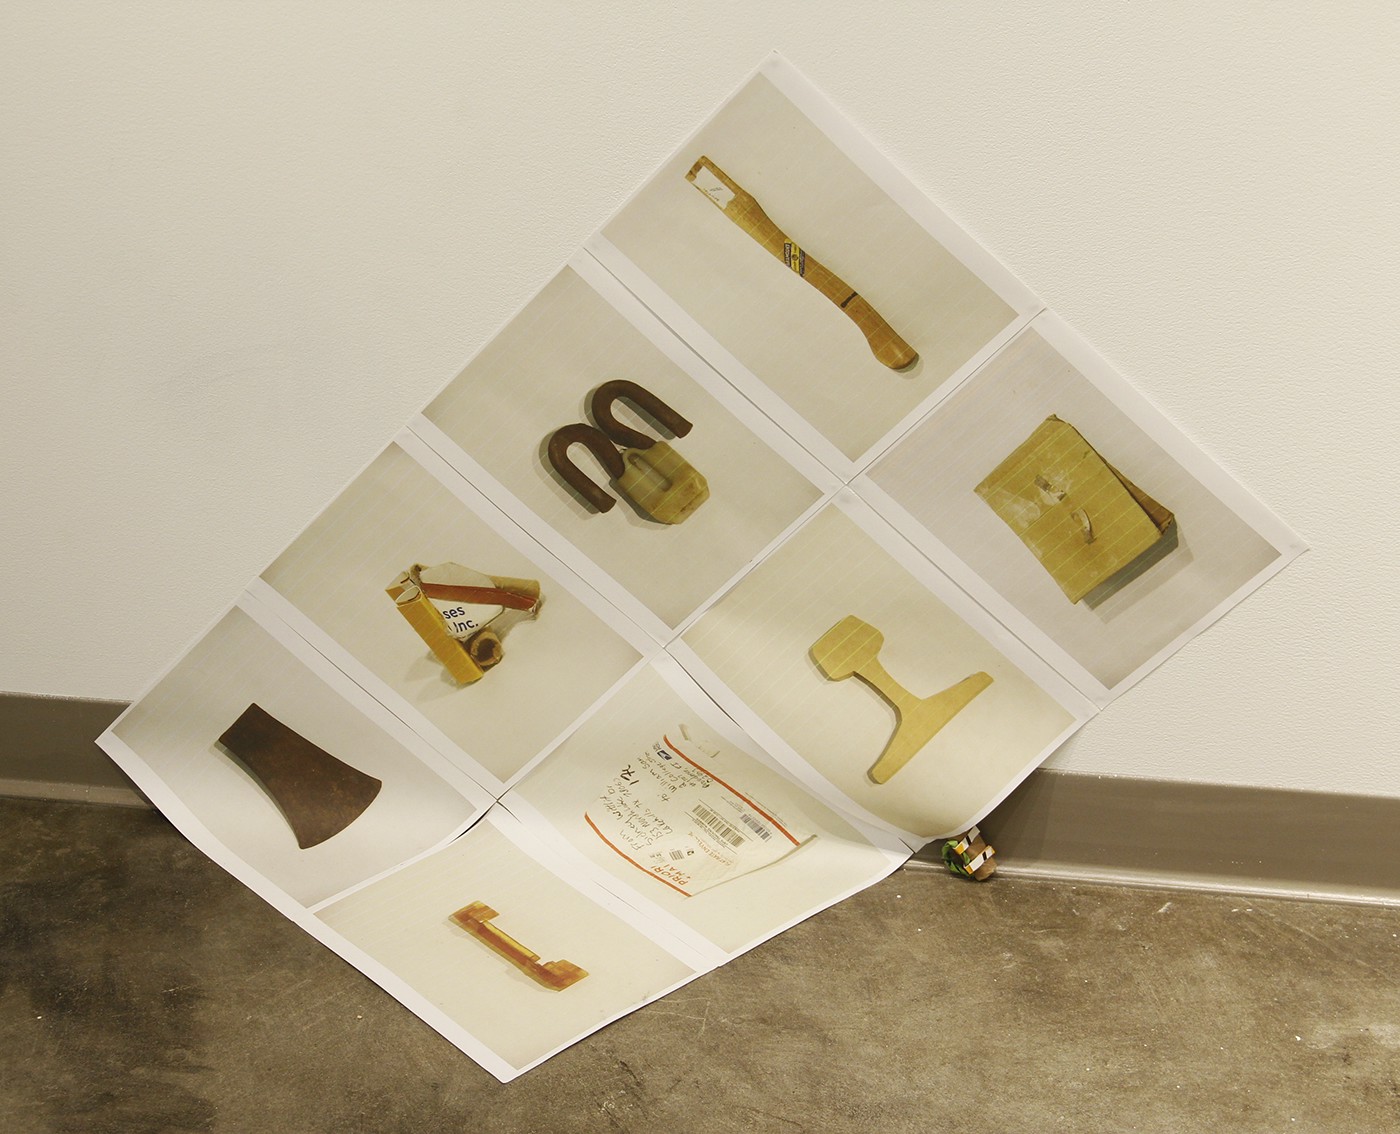 installation digital immersive Found objects Detritus transitional